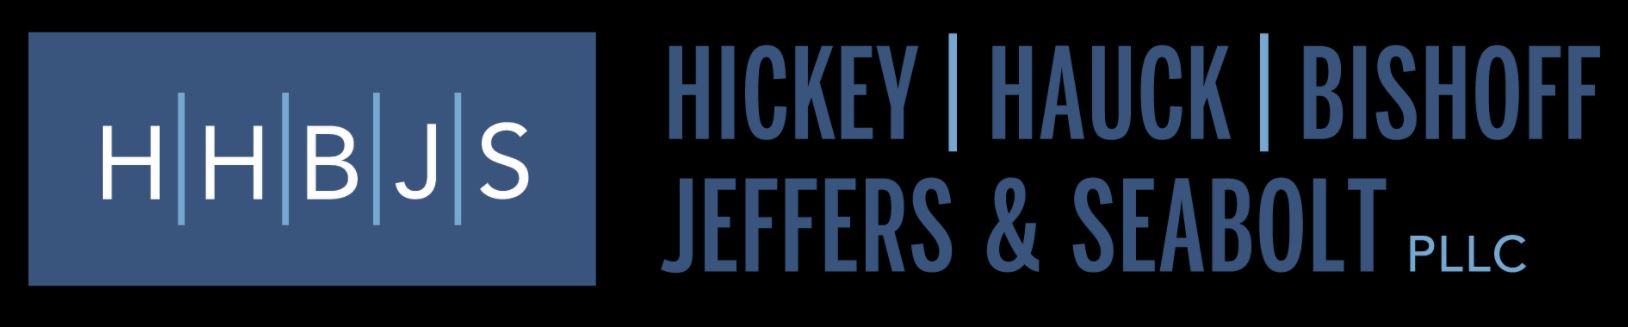 Hickey Hauck Bishoff Jeffers & Seabolt